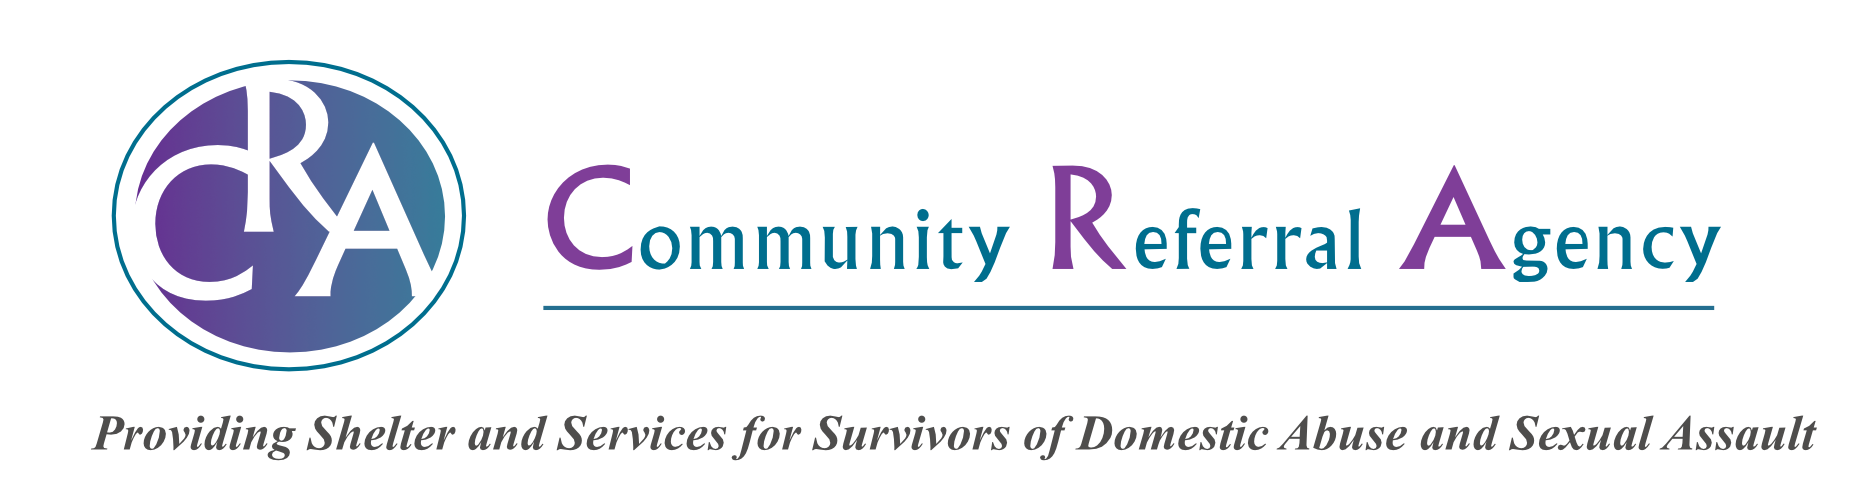 Community Referral Agency Logo